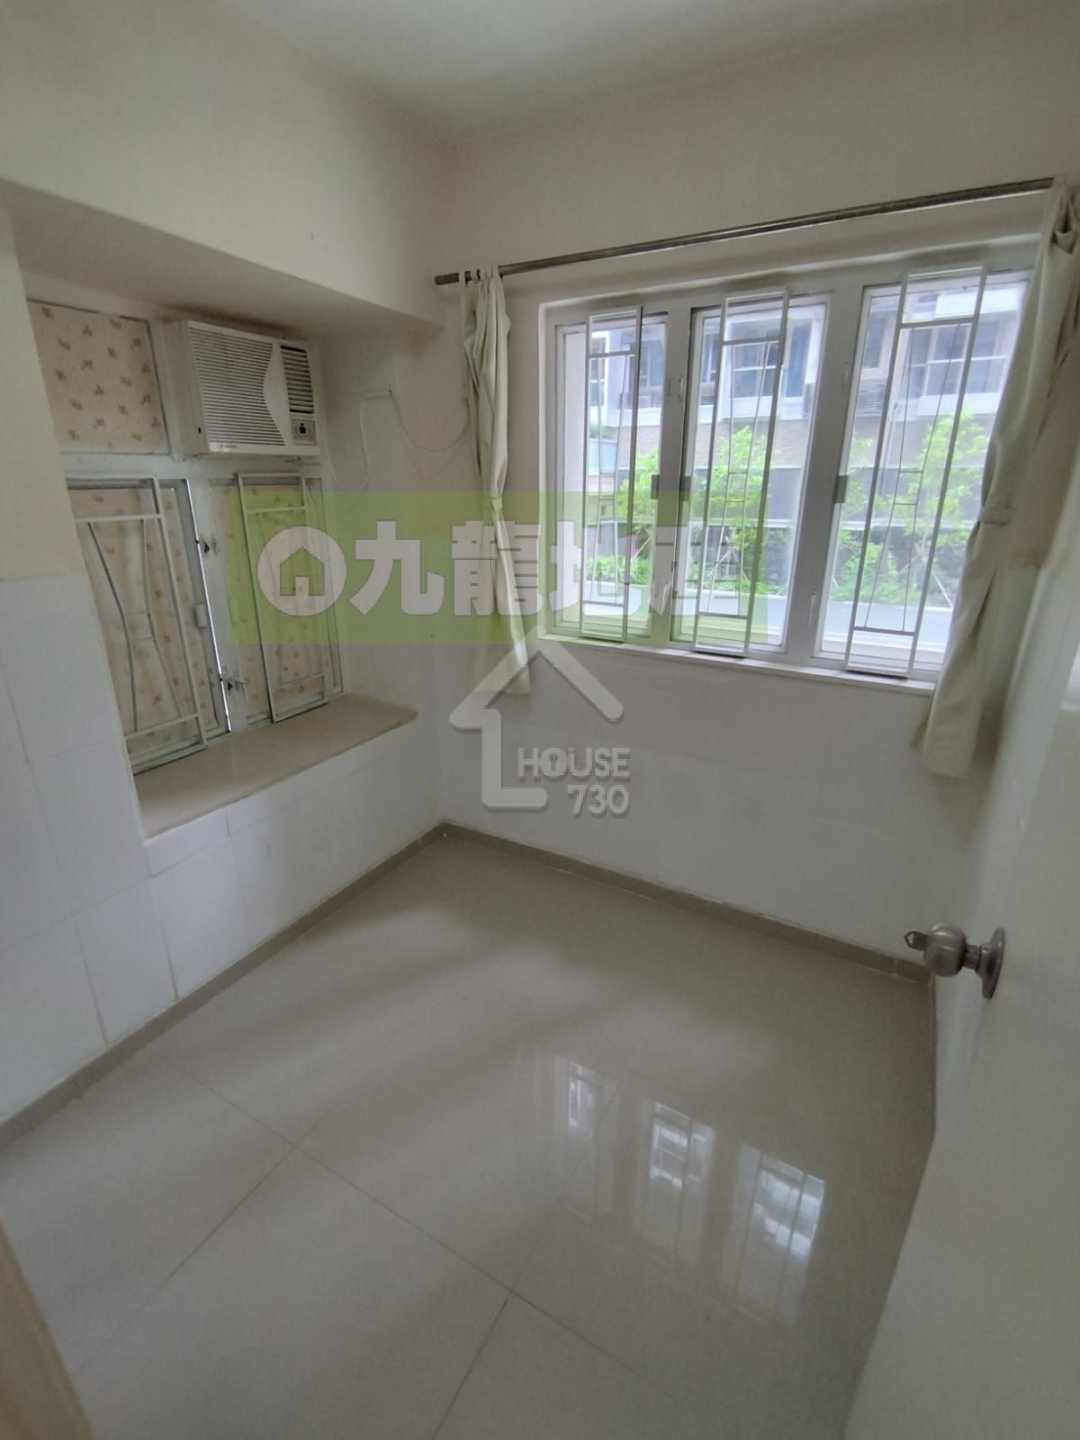 Sham Shui Po HAI TIN MANSION Middle Floor Bedroom 1 House730-6685498